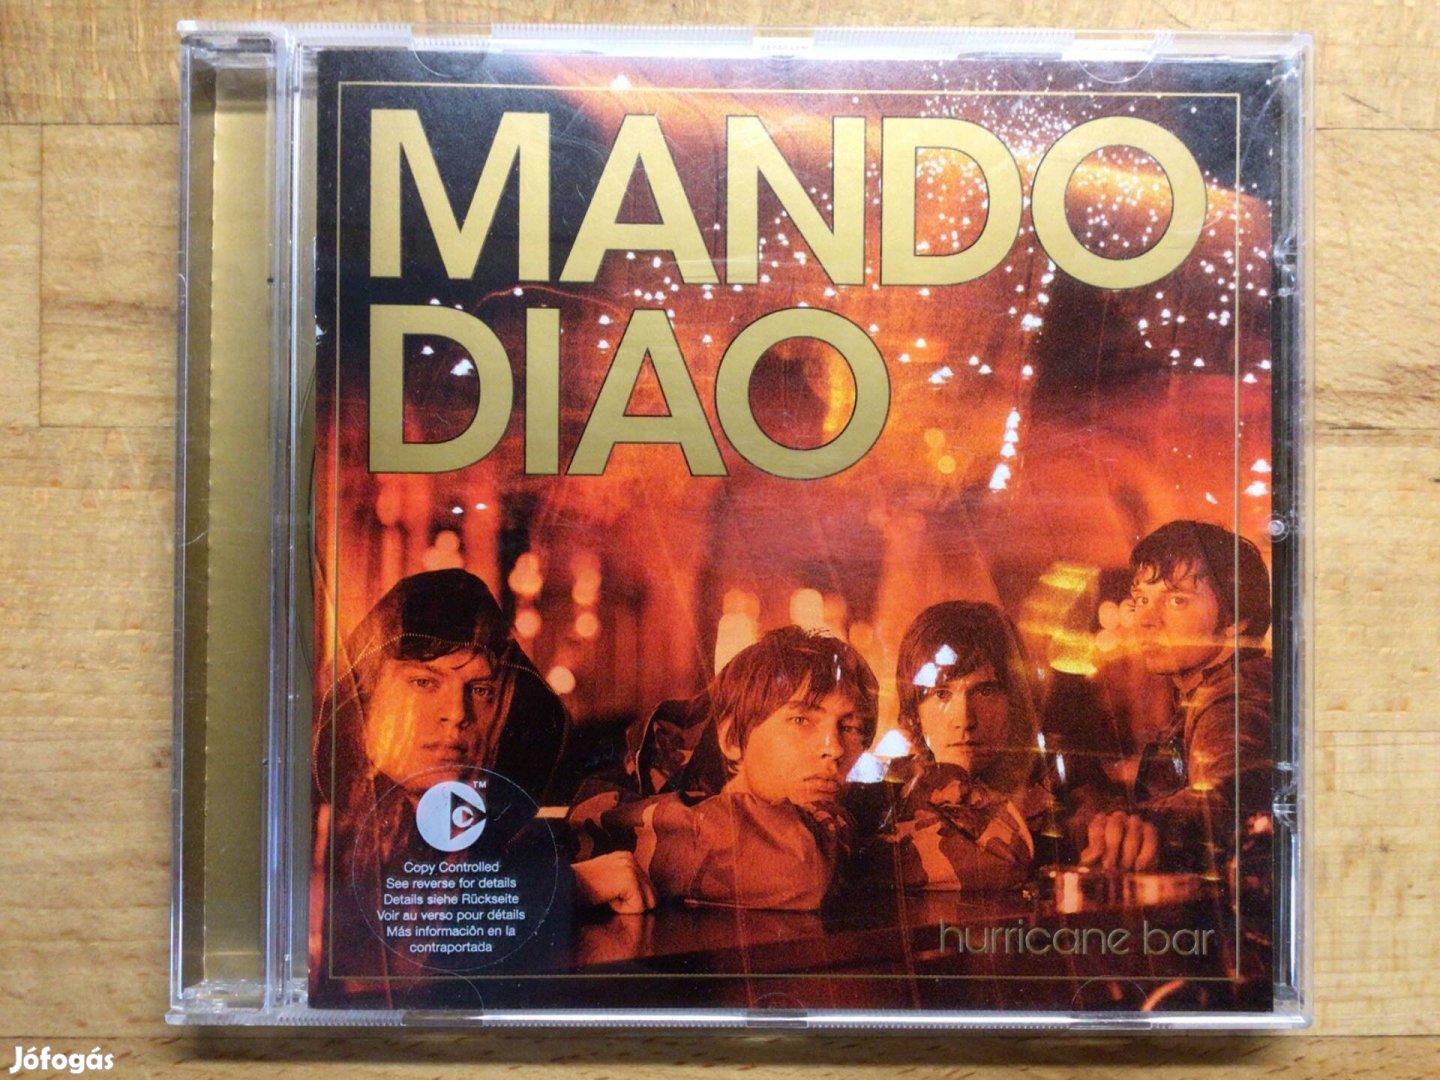 Mando Diao - Hurricane Bar, cd lemez